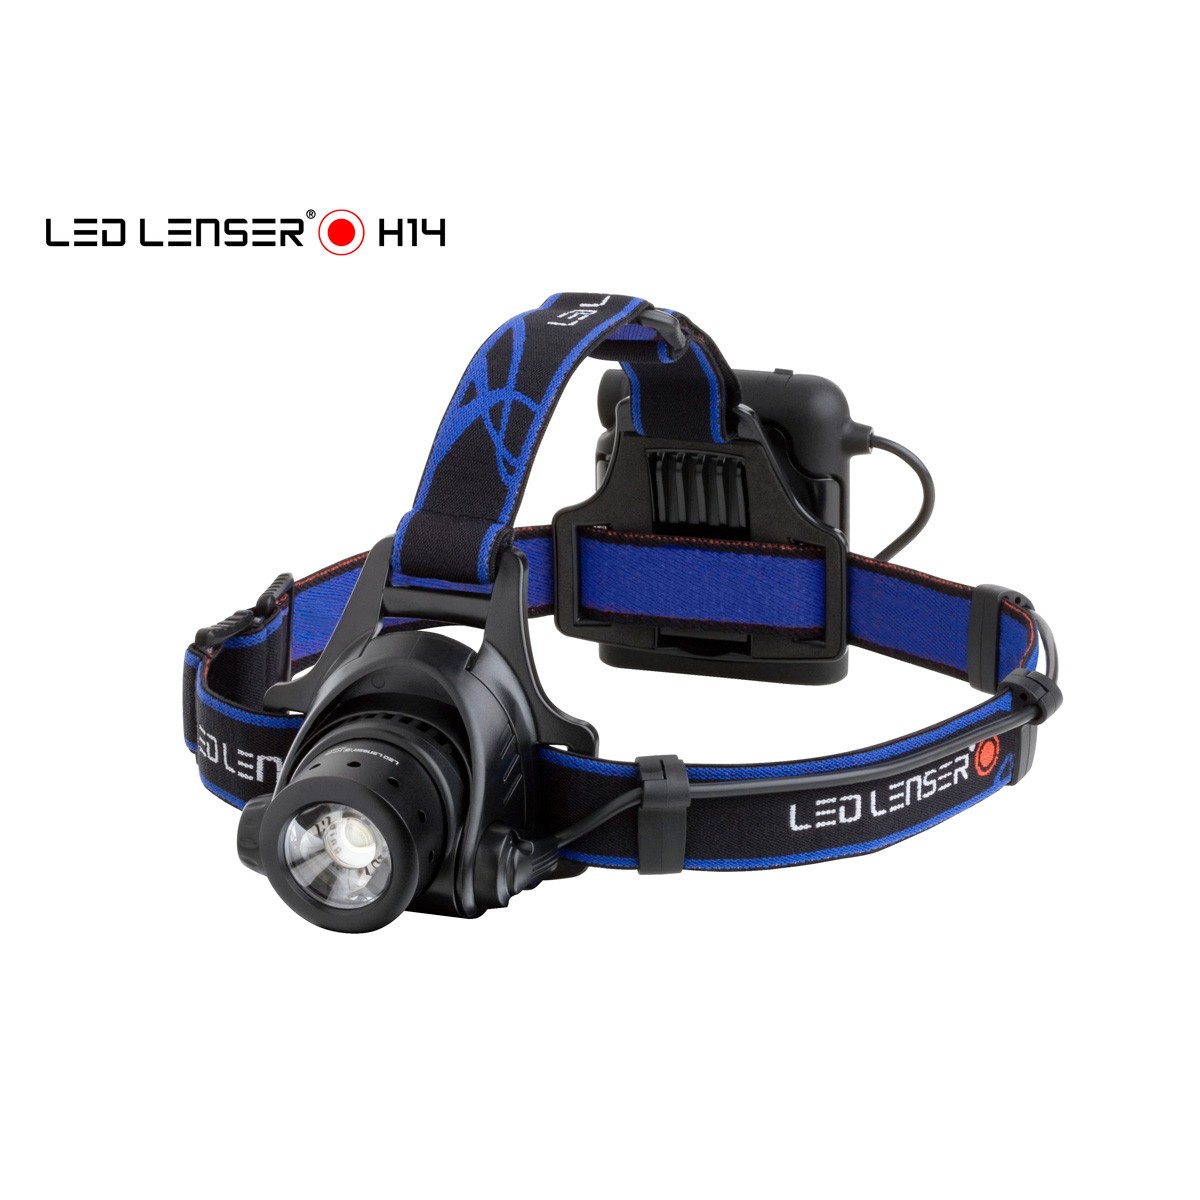 Led Lenser H14 Head Torch